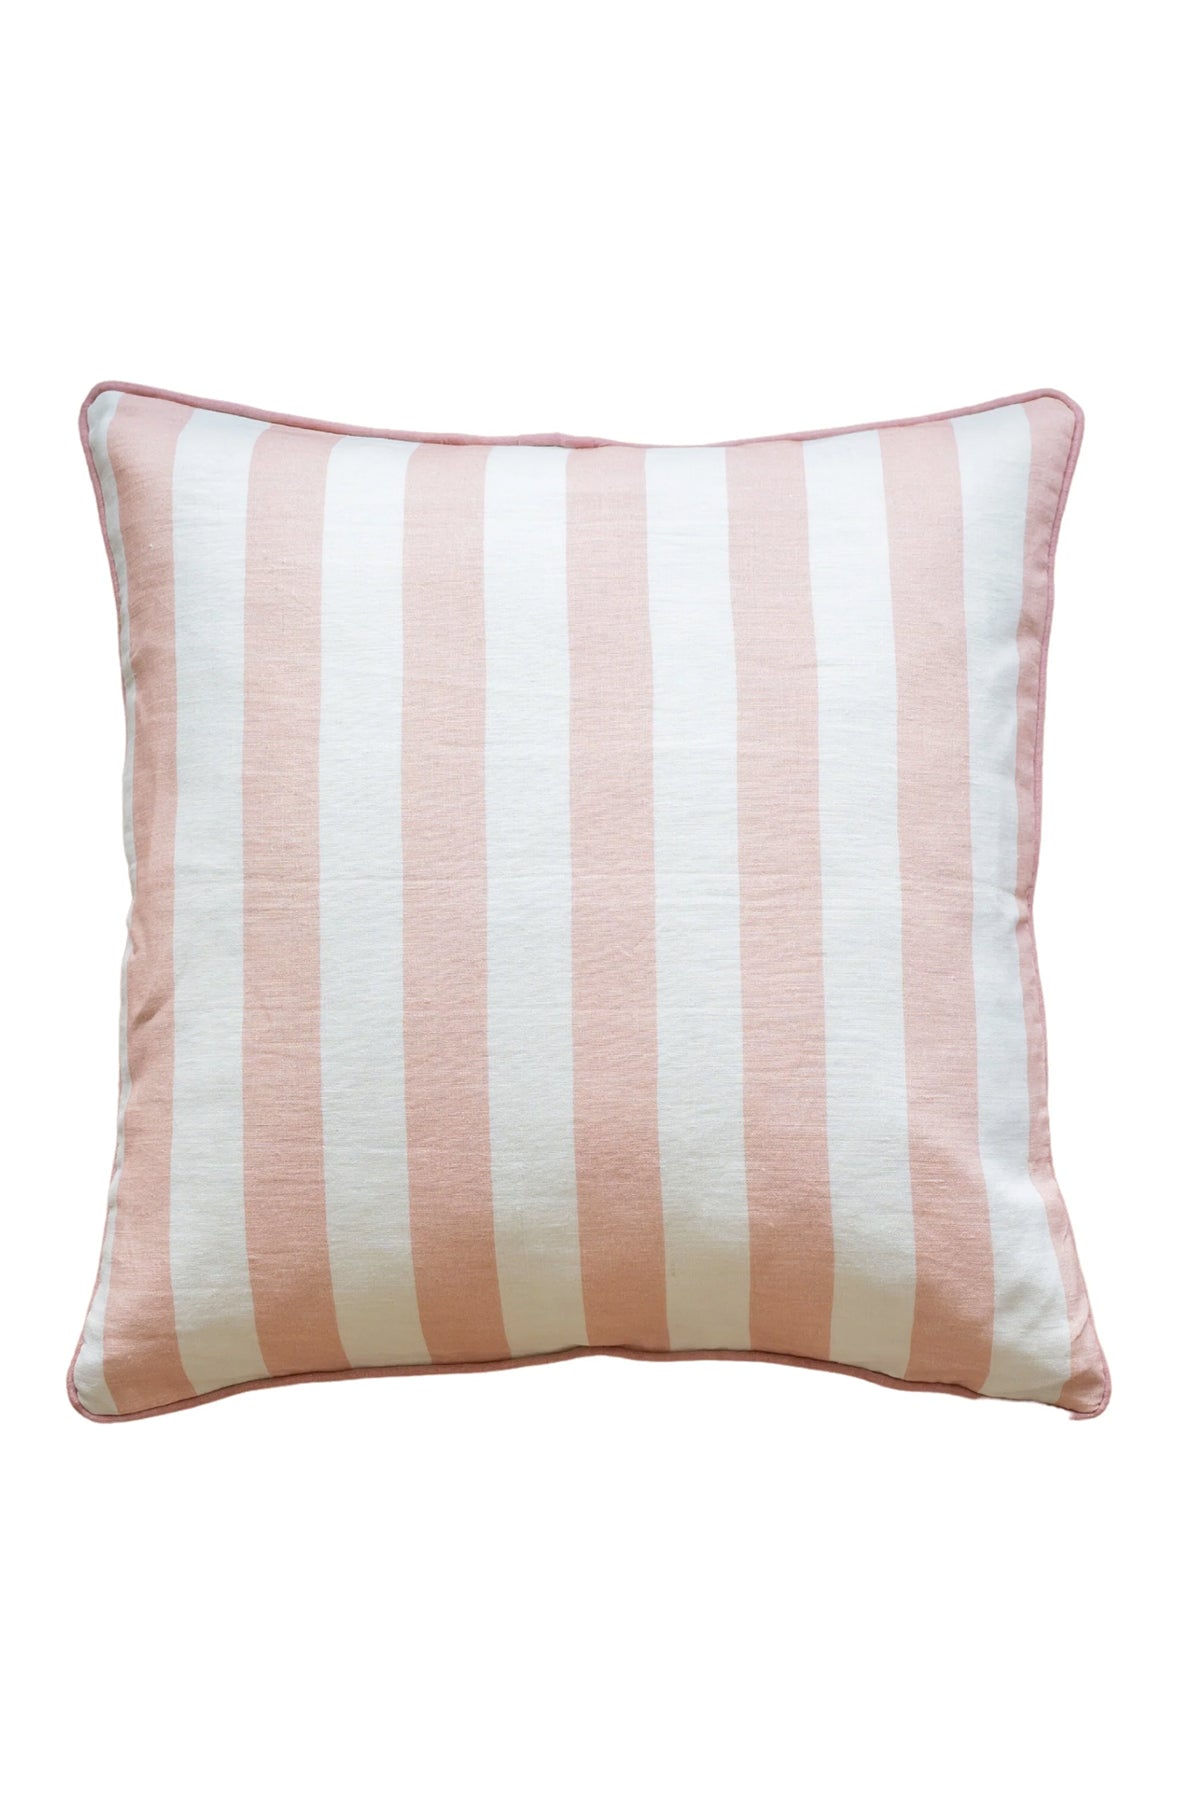 Blush St Tropez Stripe Cushion